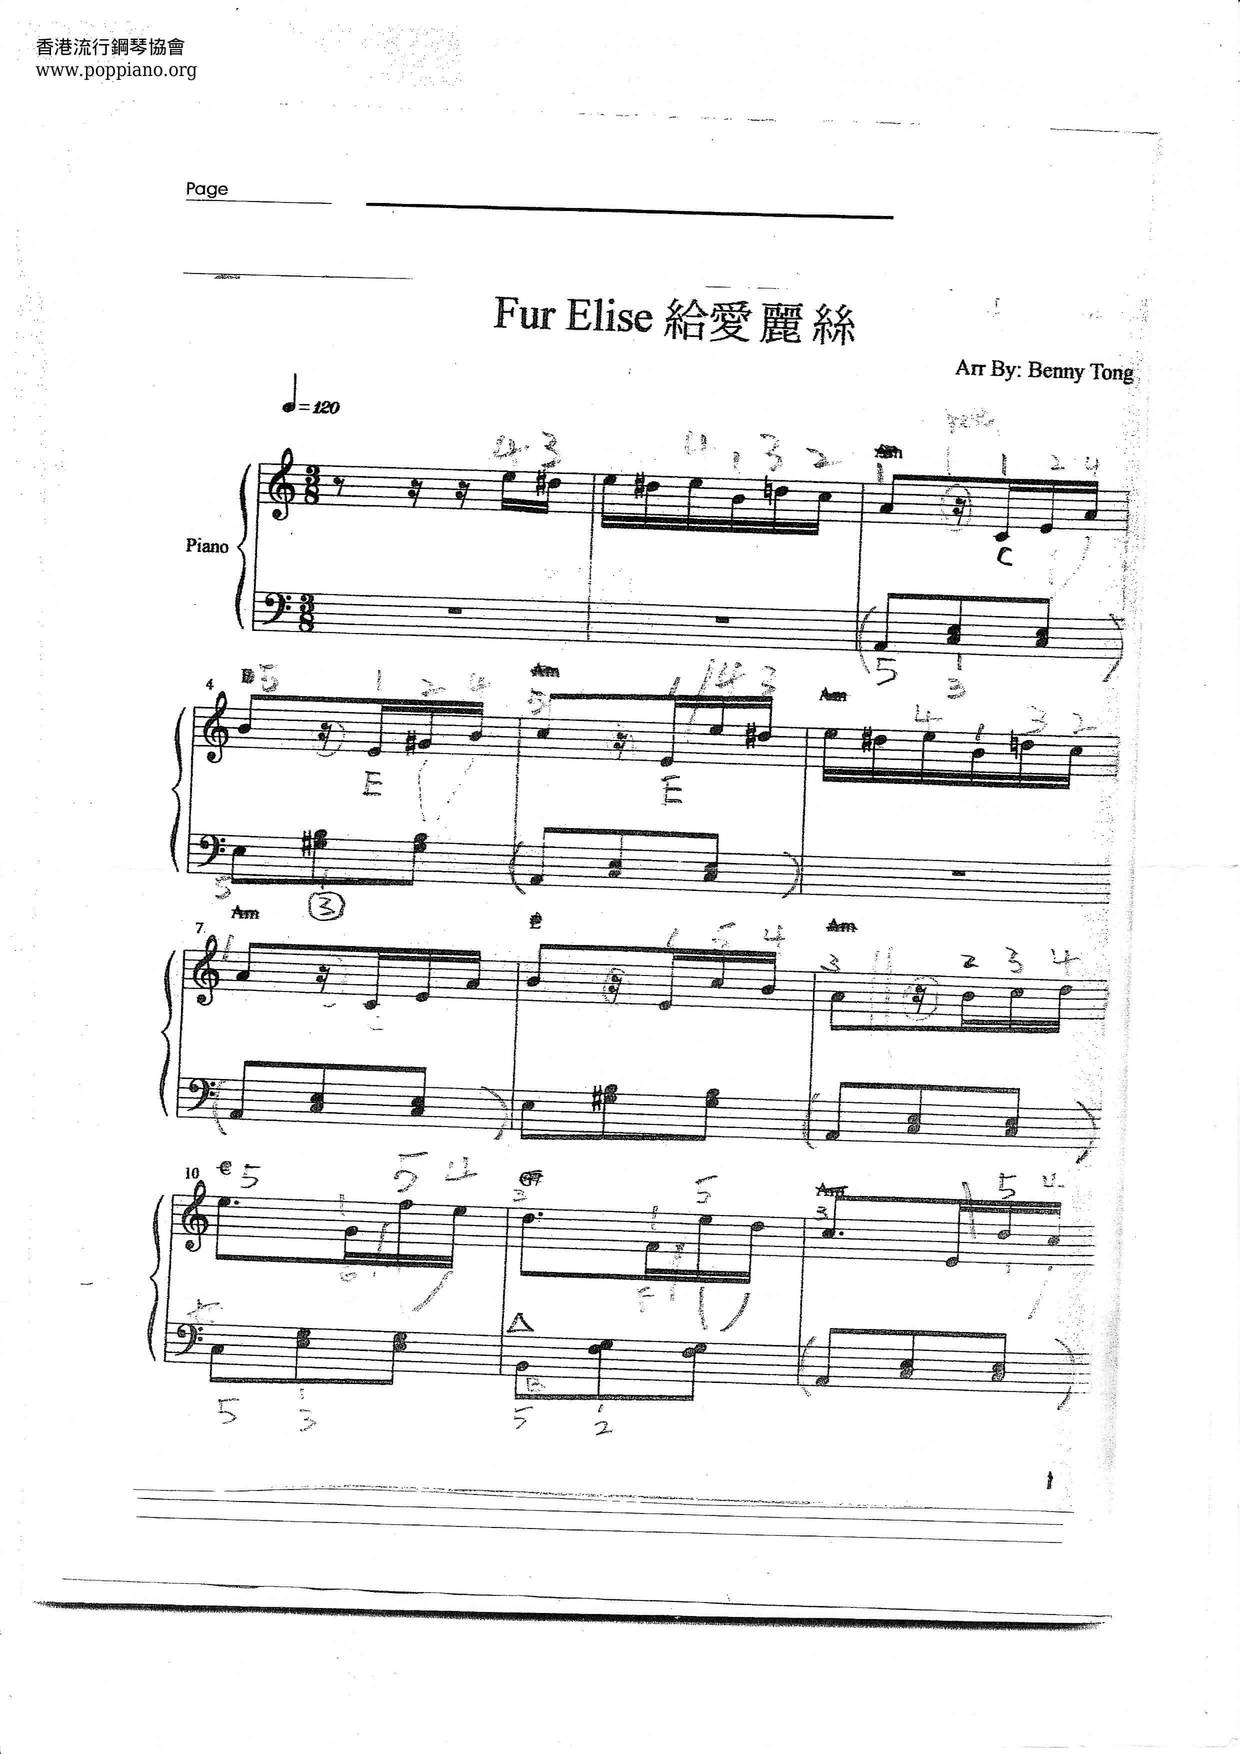 Fur Elise Score